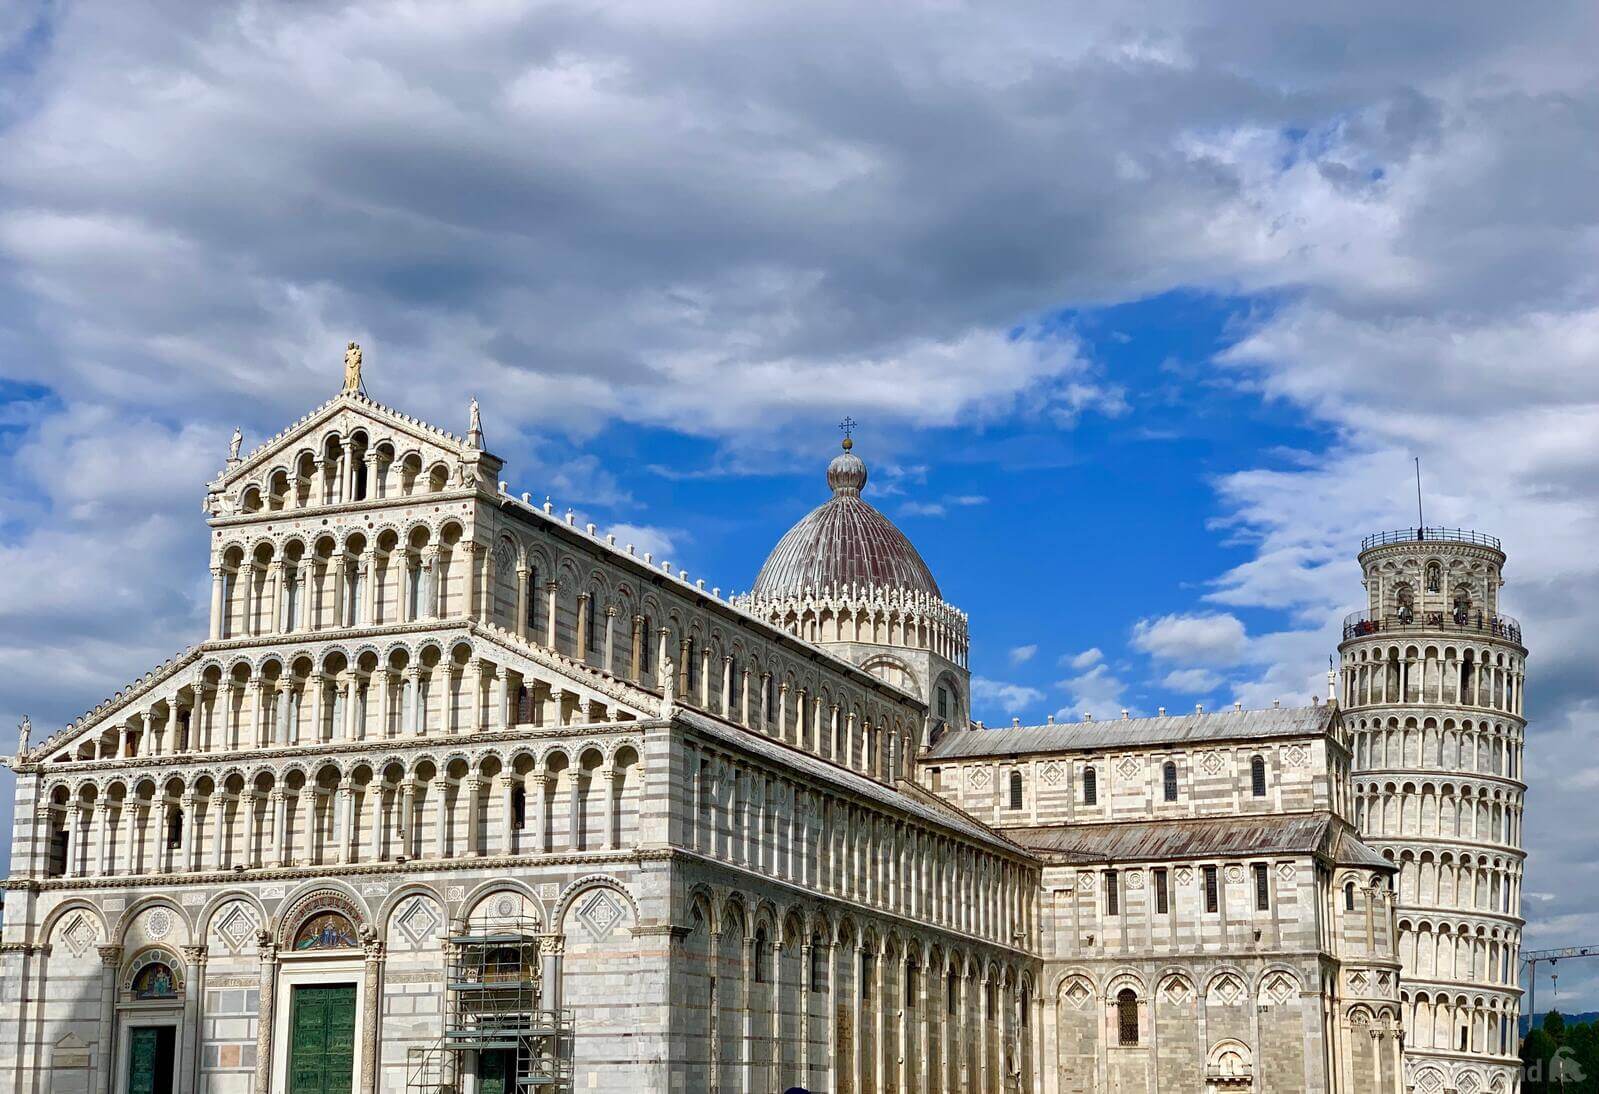 Image of Piazza del Duomo, Pisa by Team PhotoHound